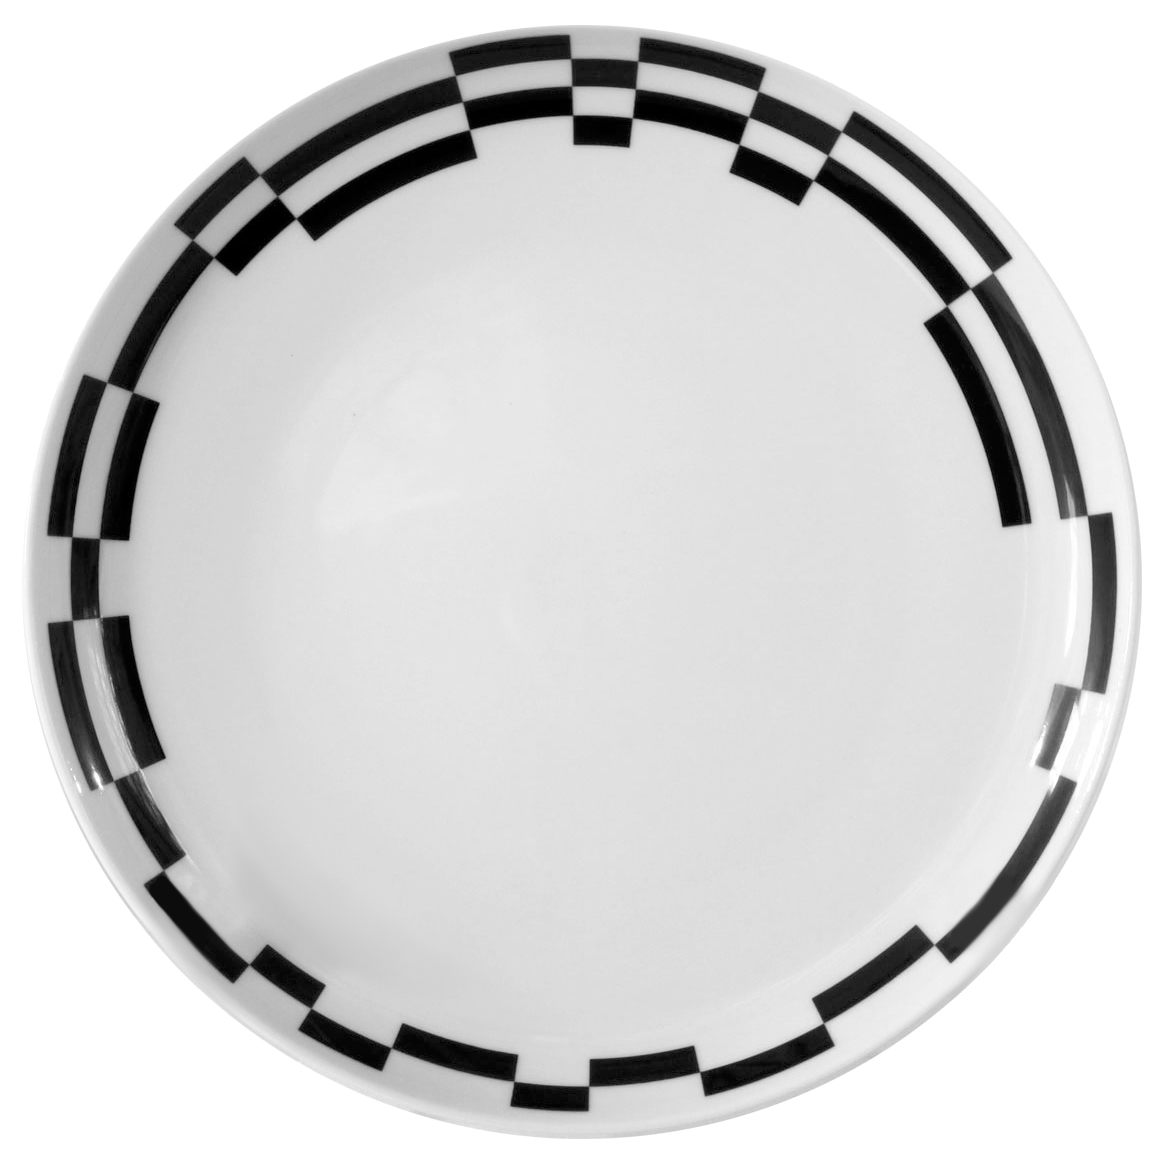 Тарелка десертная Thun Tom Черно-белые полоски 19 см тарелка десертная thun tom полоски 19 см